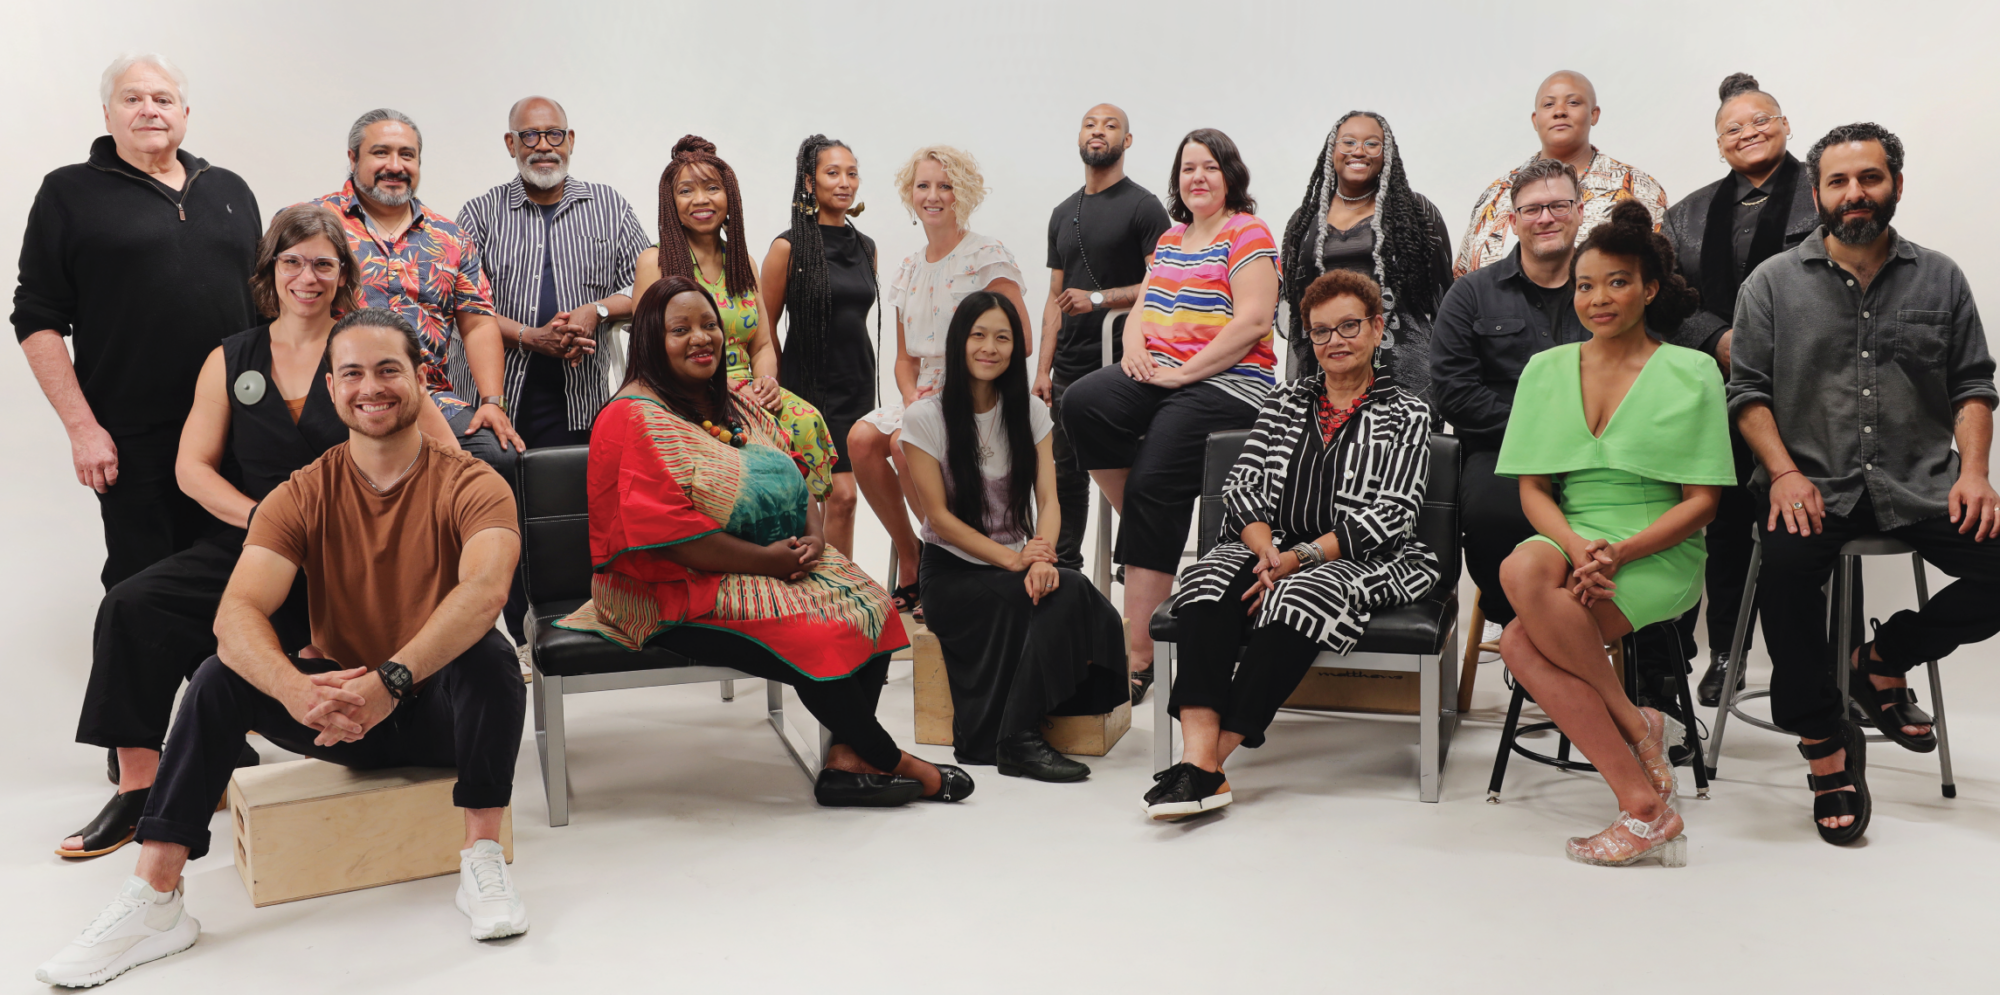 Group photo of 2023 Kresge Artist Fellows